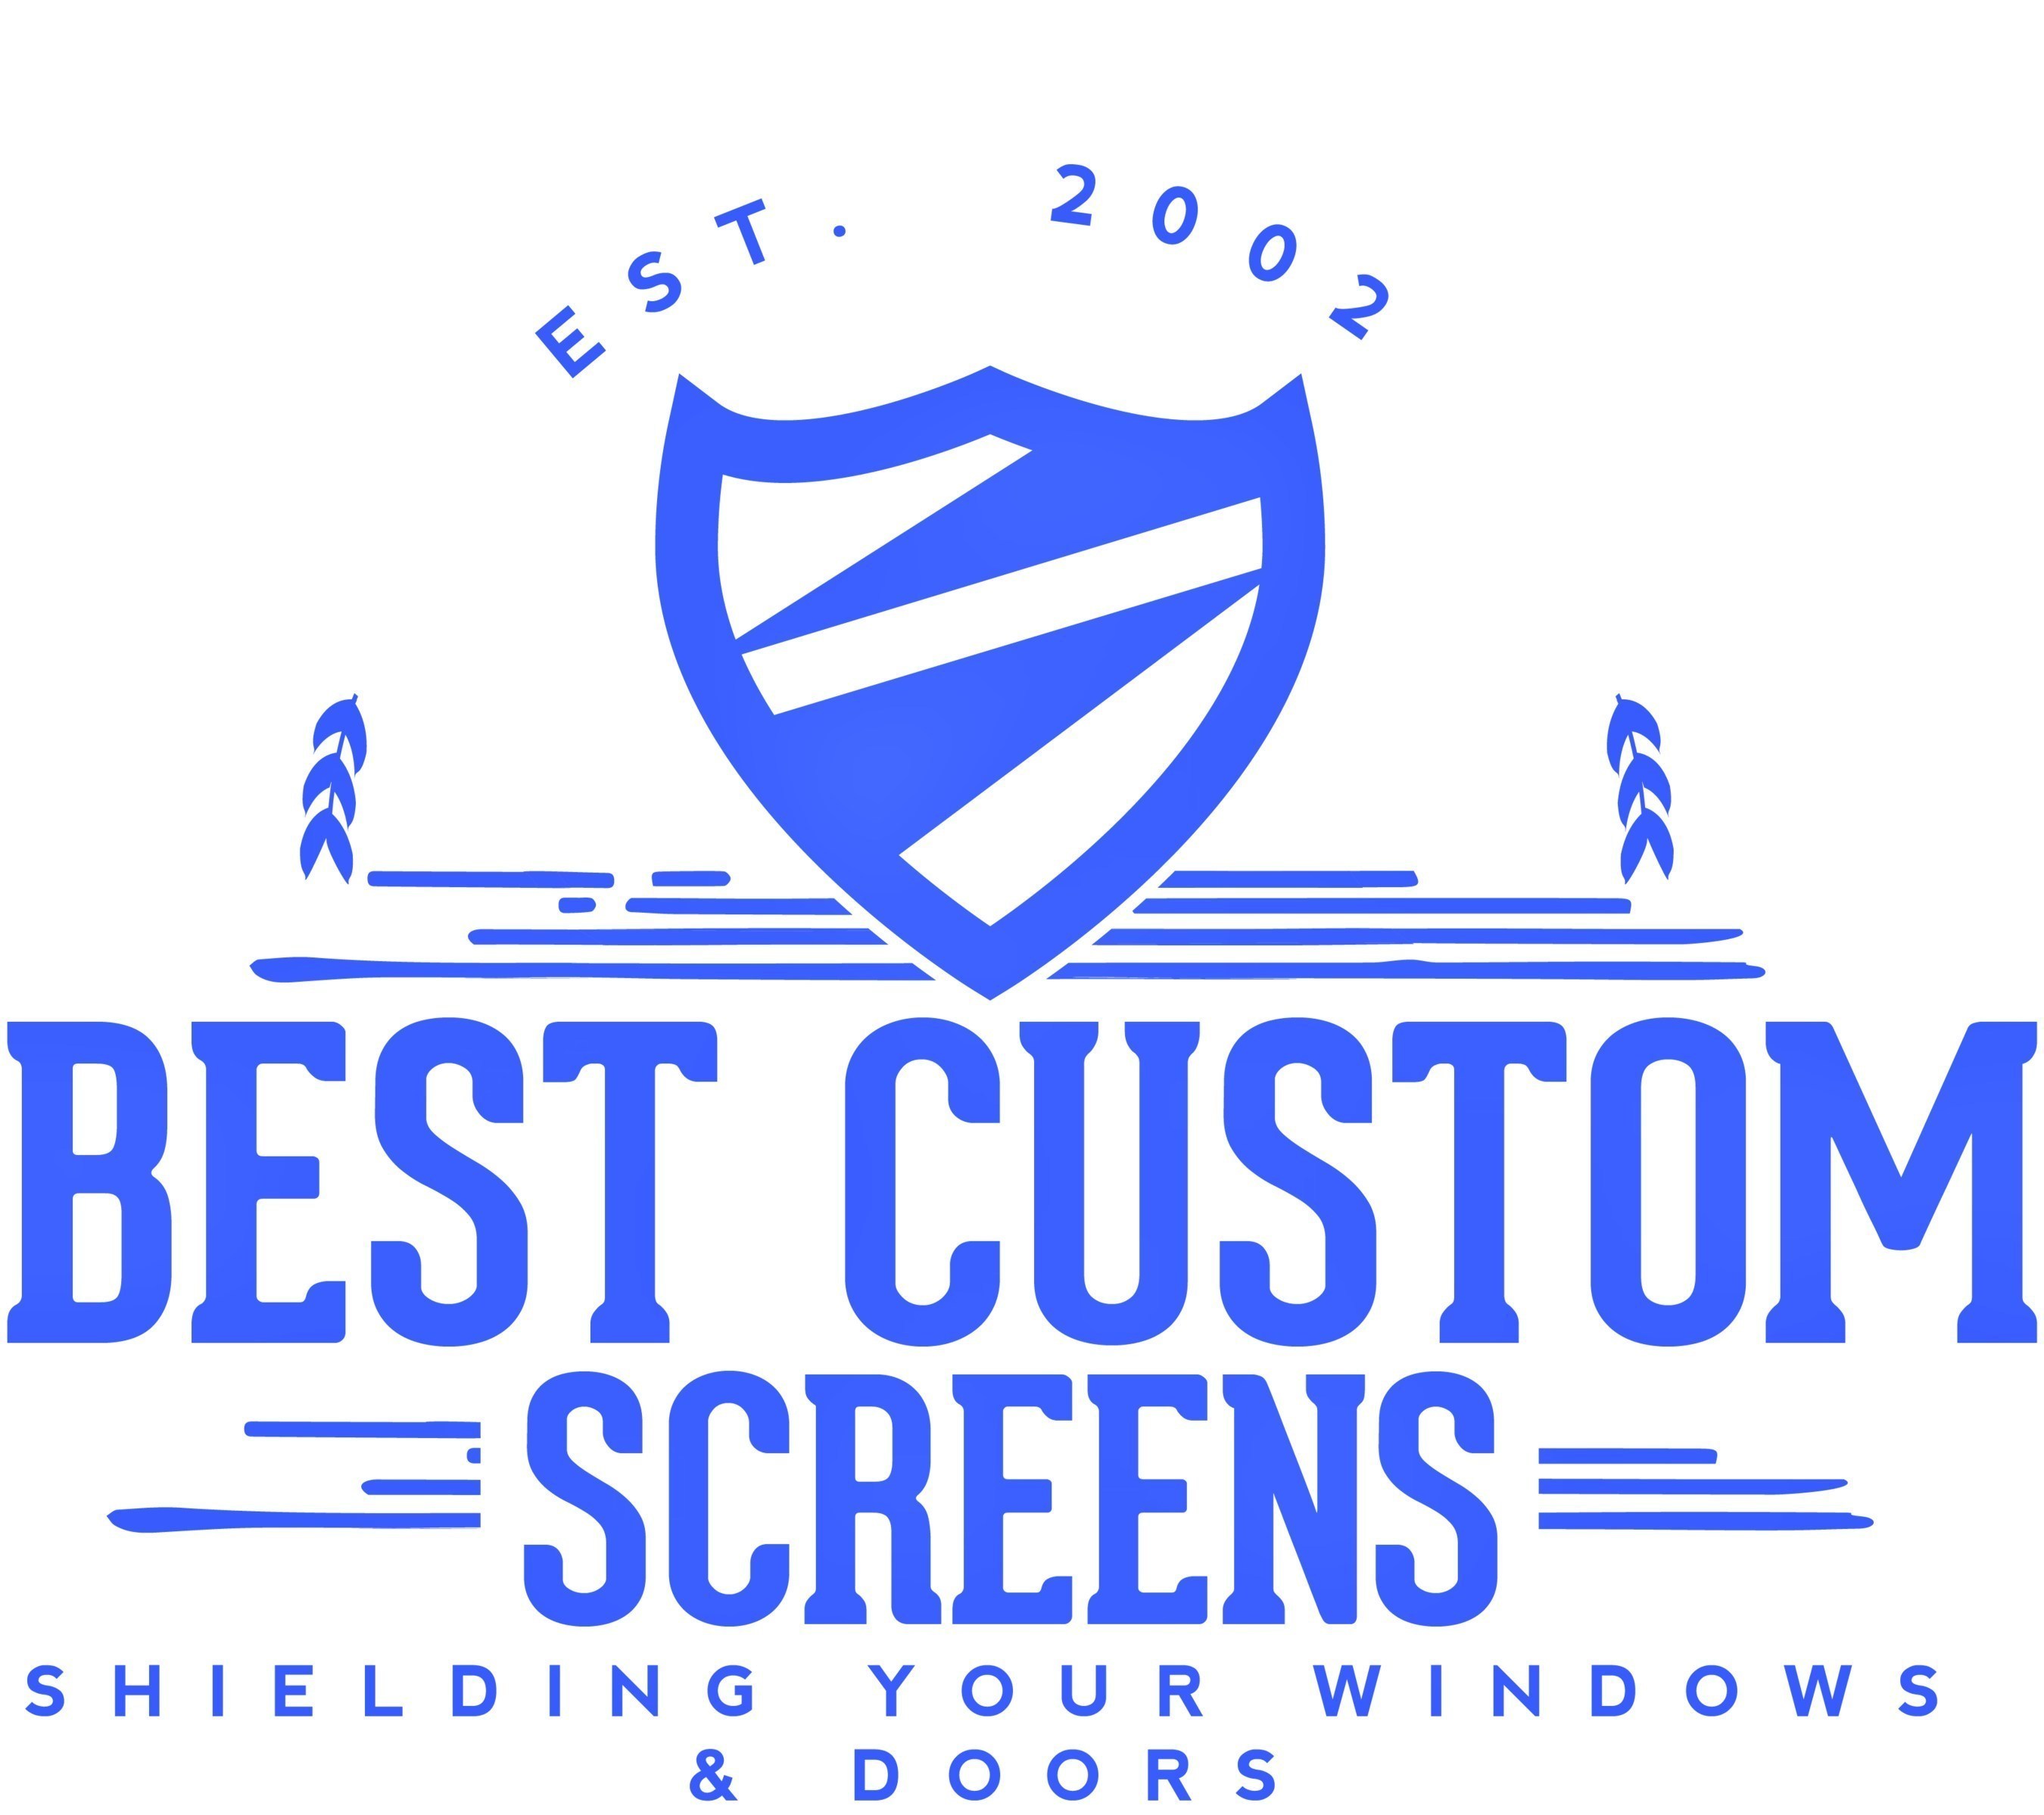 Classic Retro logo of Best Custom Screens designed to show how the company SHIELDS WINDOWS AND DOORS